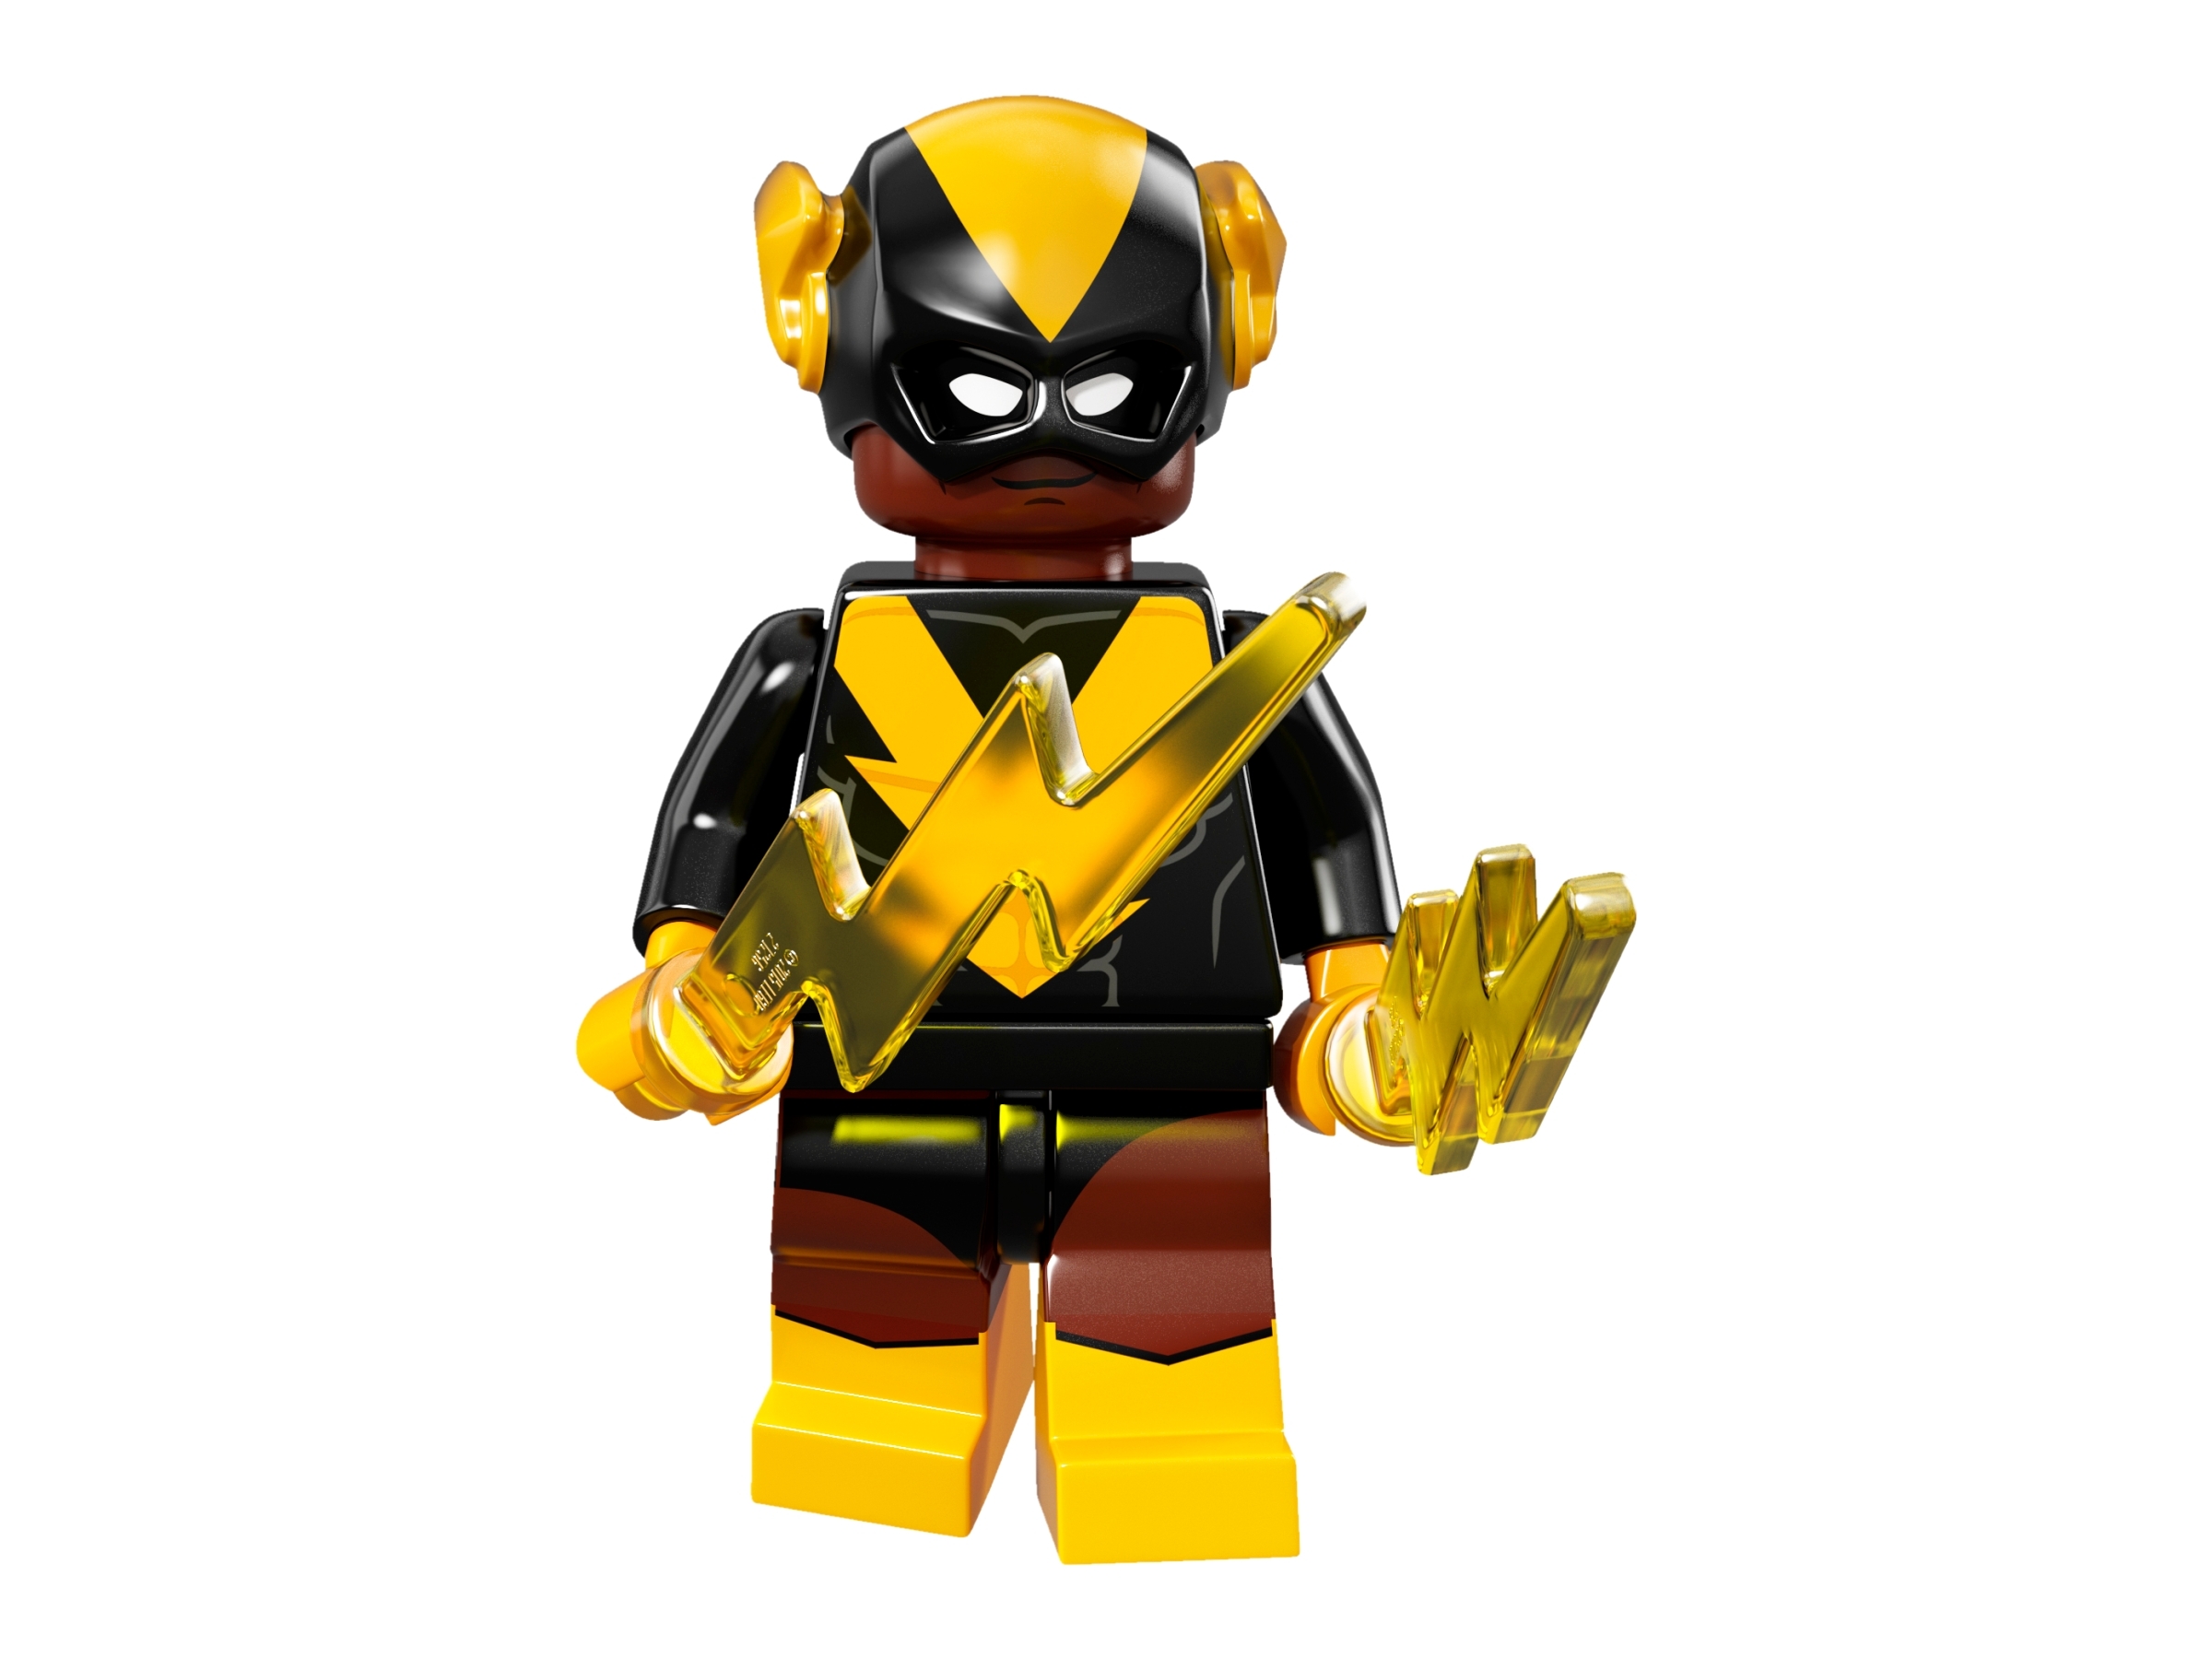 LEGO minifigures Batman